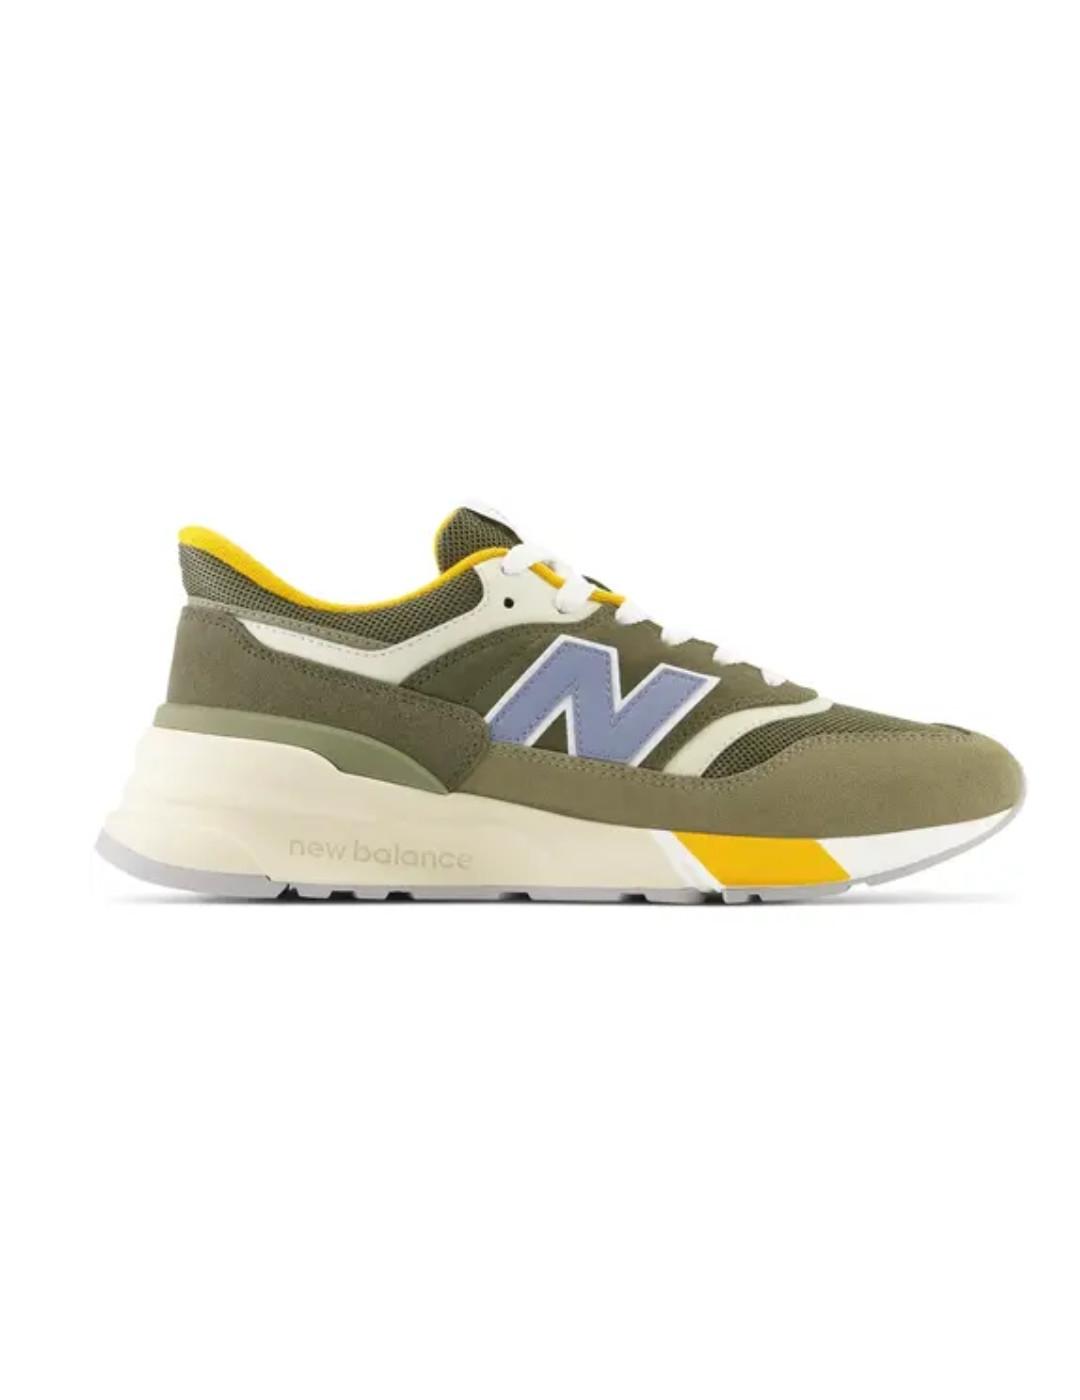 Zapatillas New Balance 997 verde/amarilla para hombre